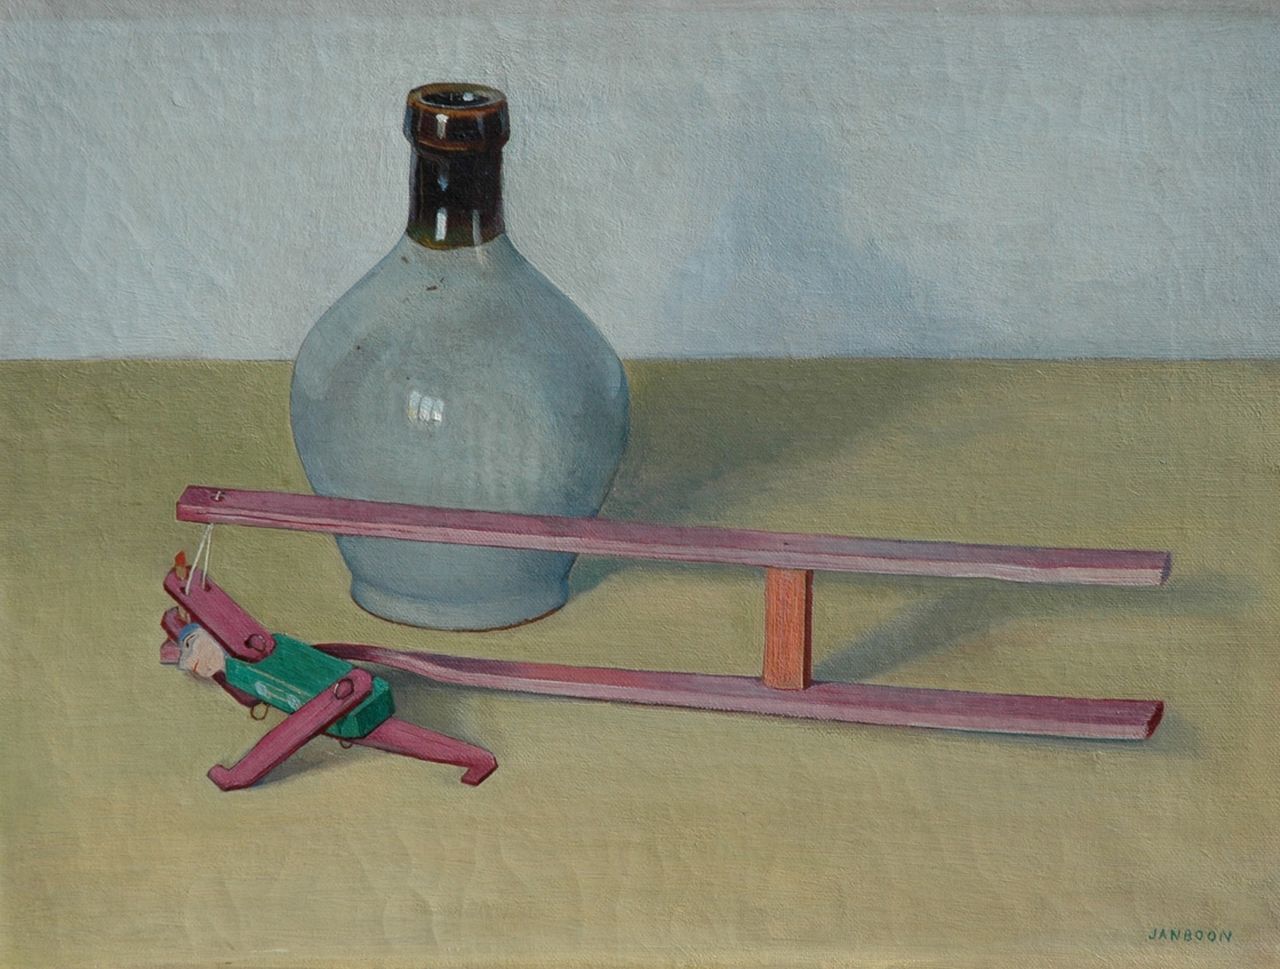 Boon J.  | Jan Boon, A still life with a jug and a toy, Öl auf Leinwand 30,2 x 40,5 cm, signed l.r.